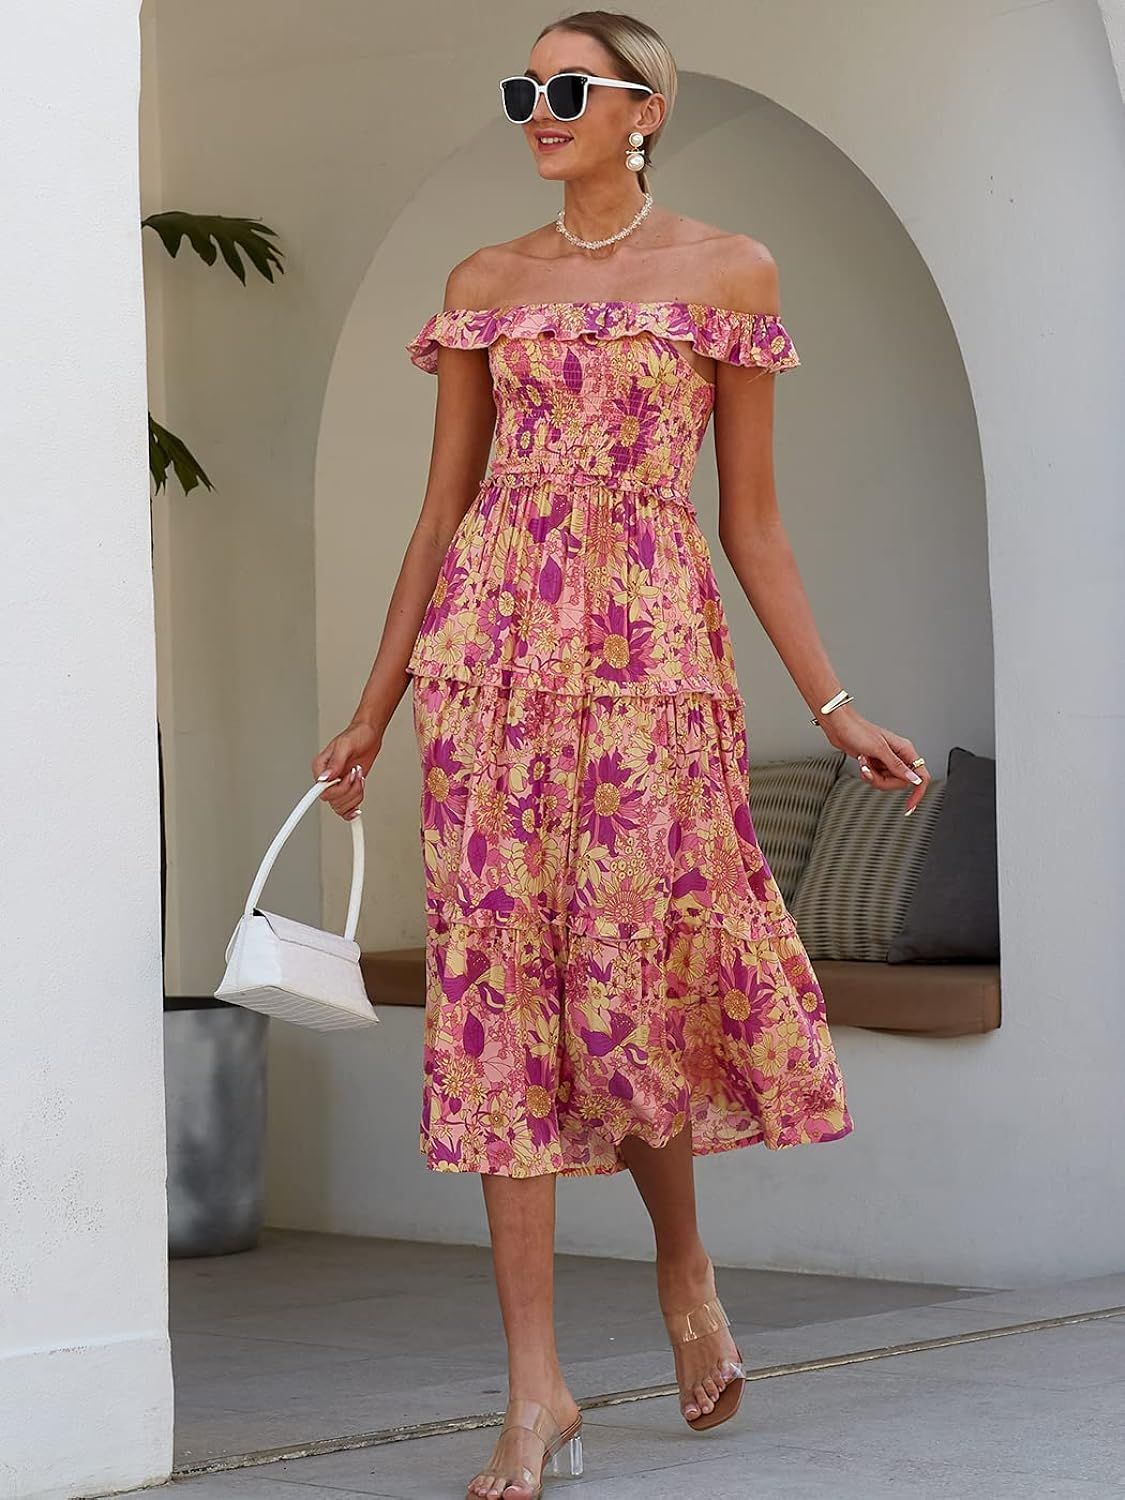 Anna-Kaci Women's Casual Off Shoulder Ruffle Dress Boho Floral Print Summer Beach Maxi Dresses | Amazon (US)